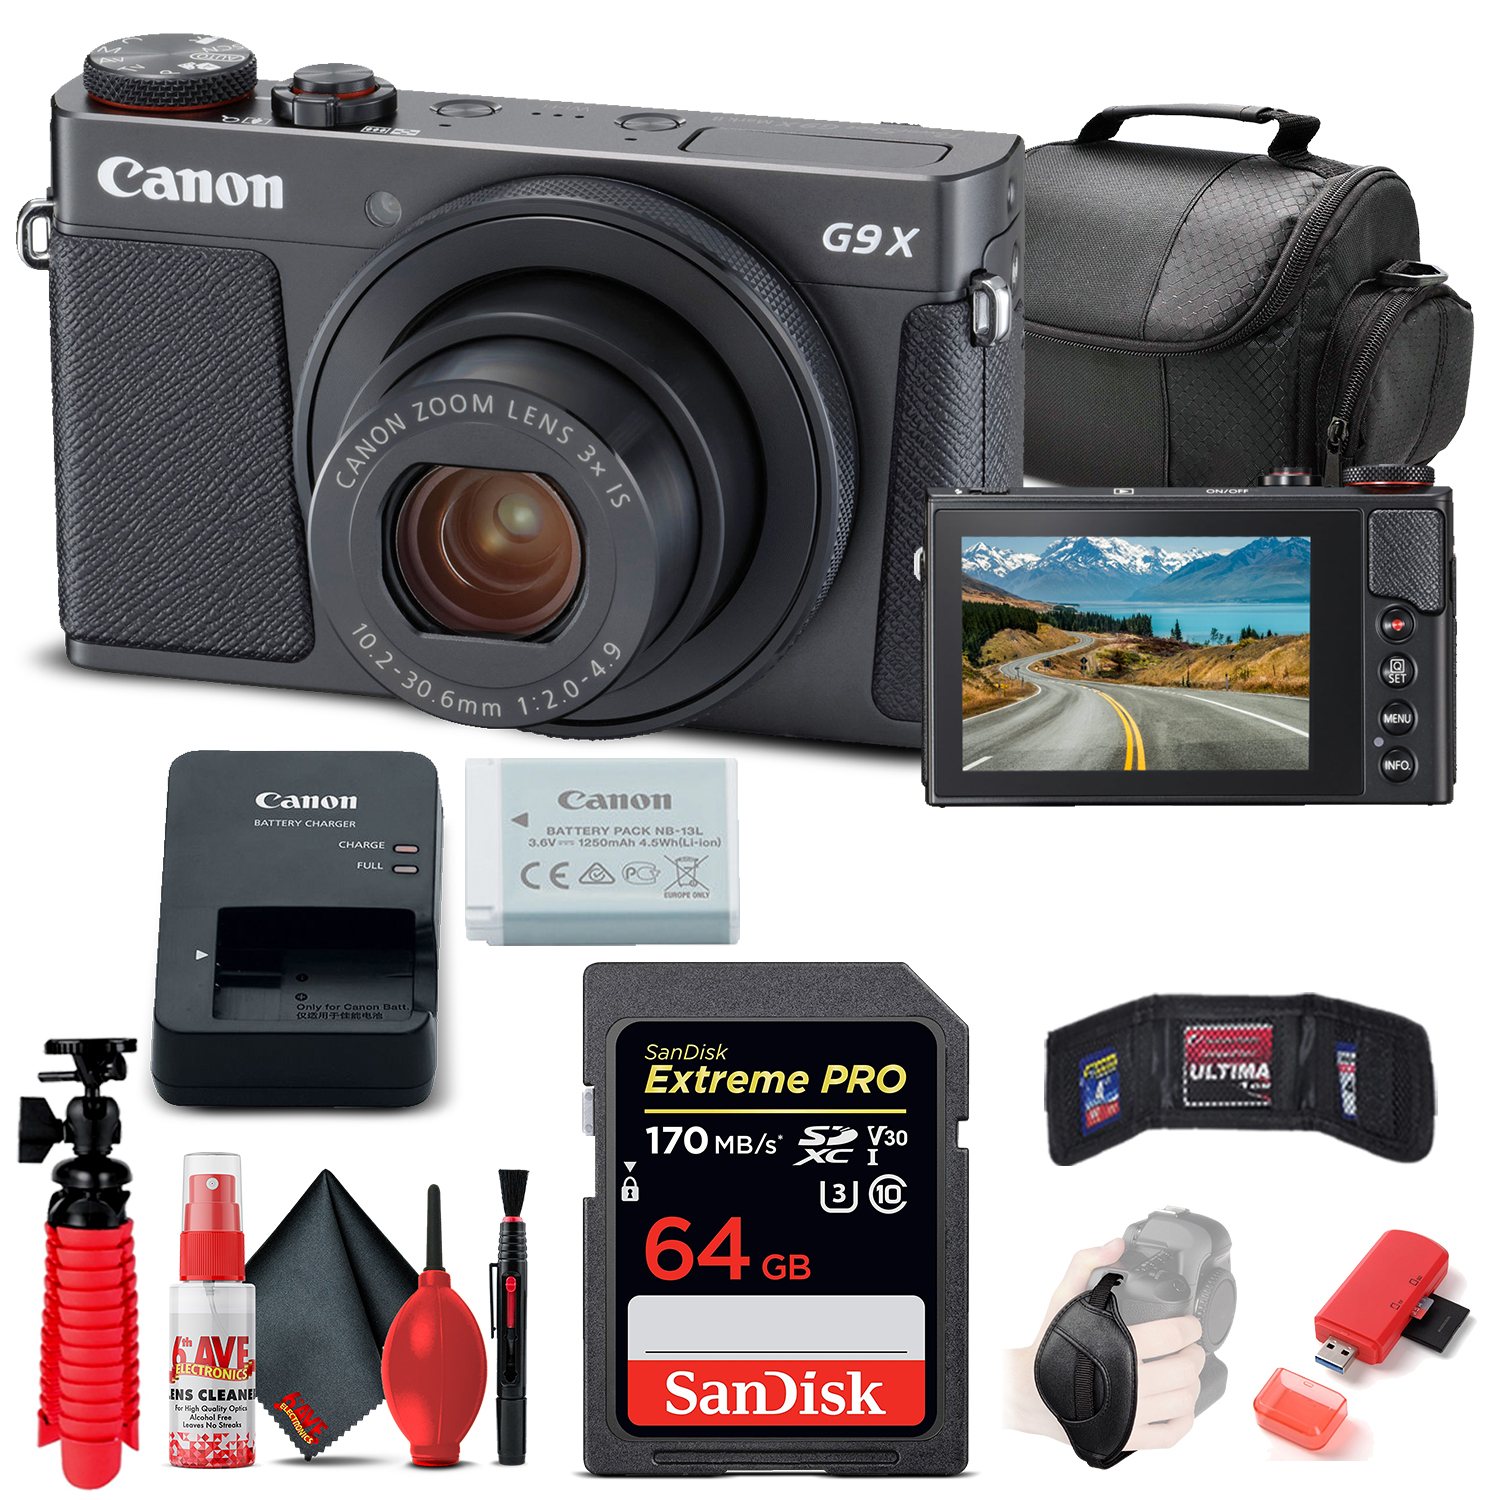 Práctico Peligro damnificados Canon PowerShot G9 X Mark II Digital Camera (1717C001) + 64GB Card + More  13803284928 | eBay